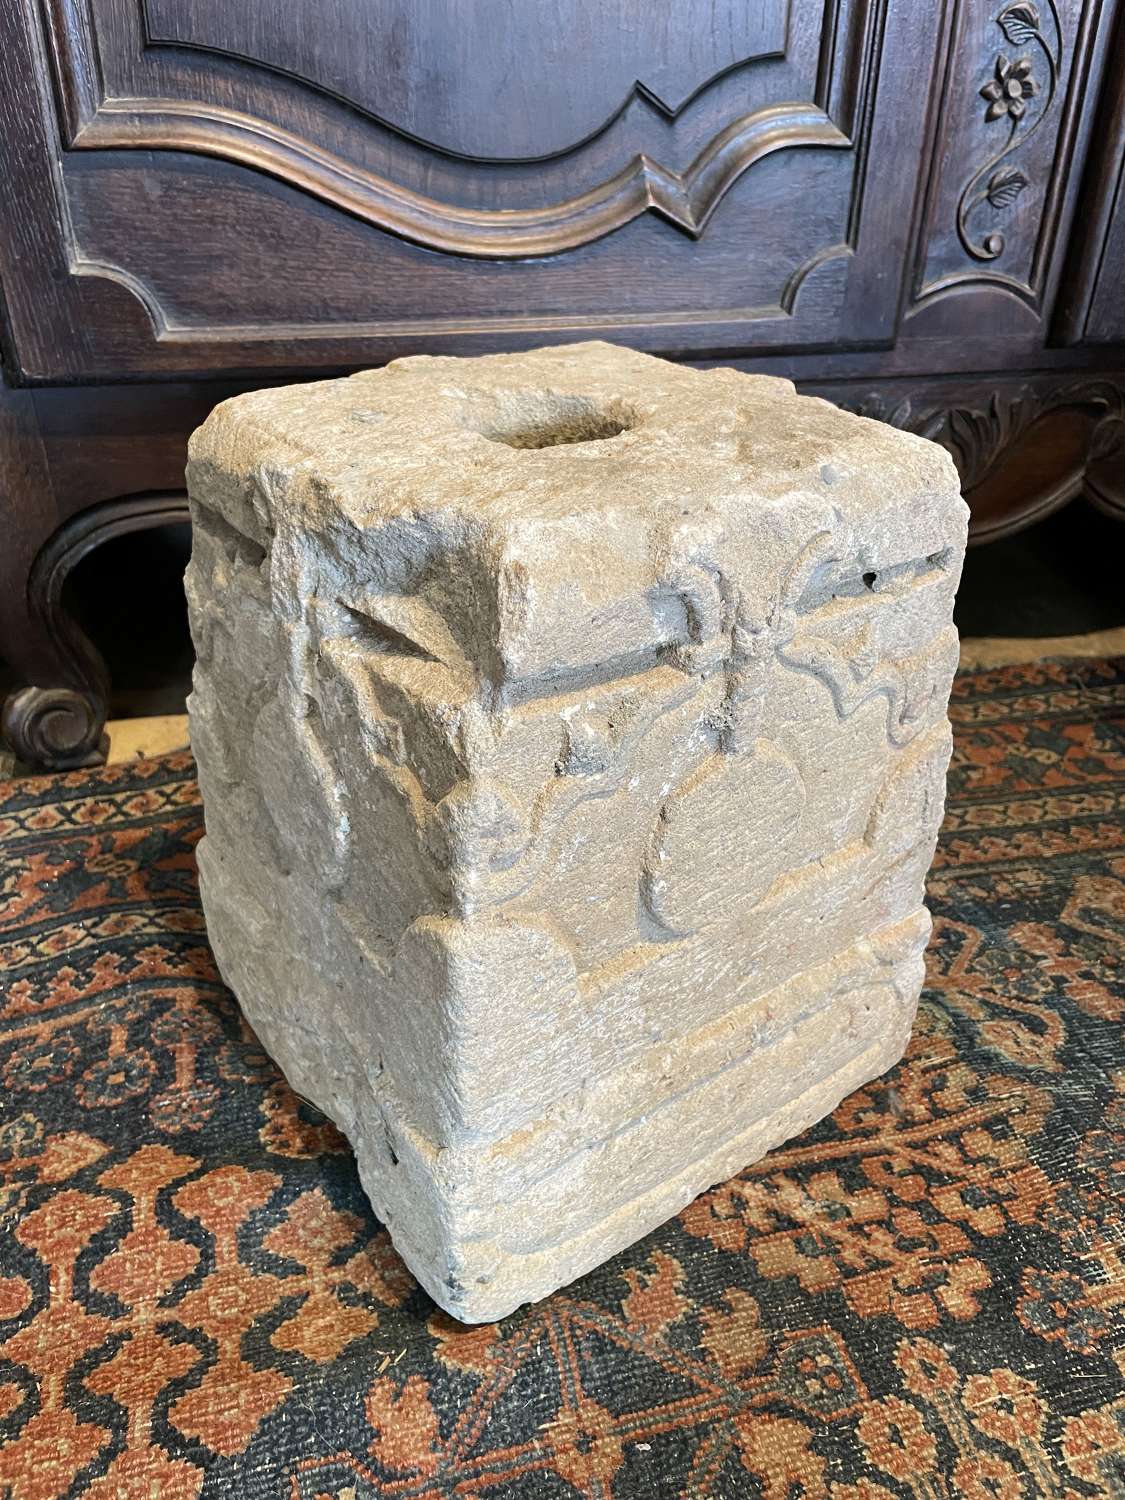 Antique Indian Carved Stone Column Base